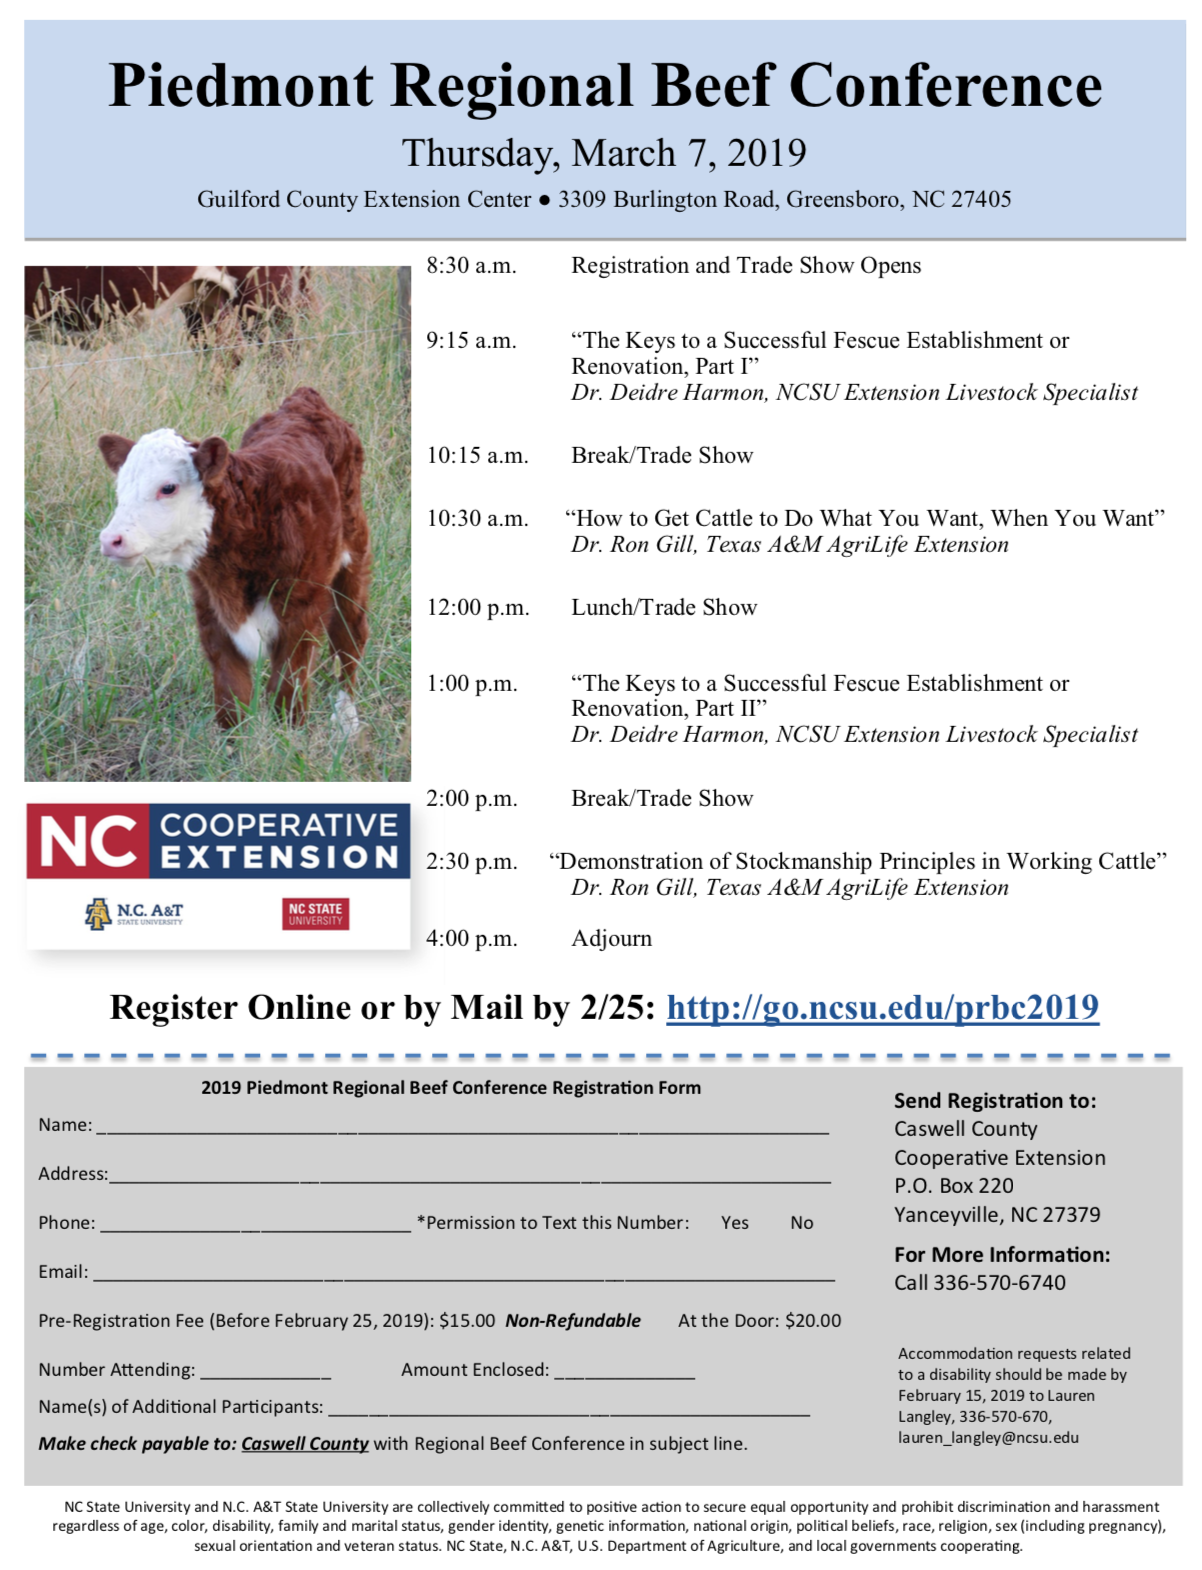 Piedmont Regional Beef Conference flyer image